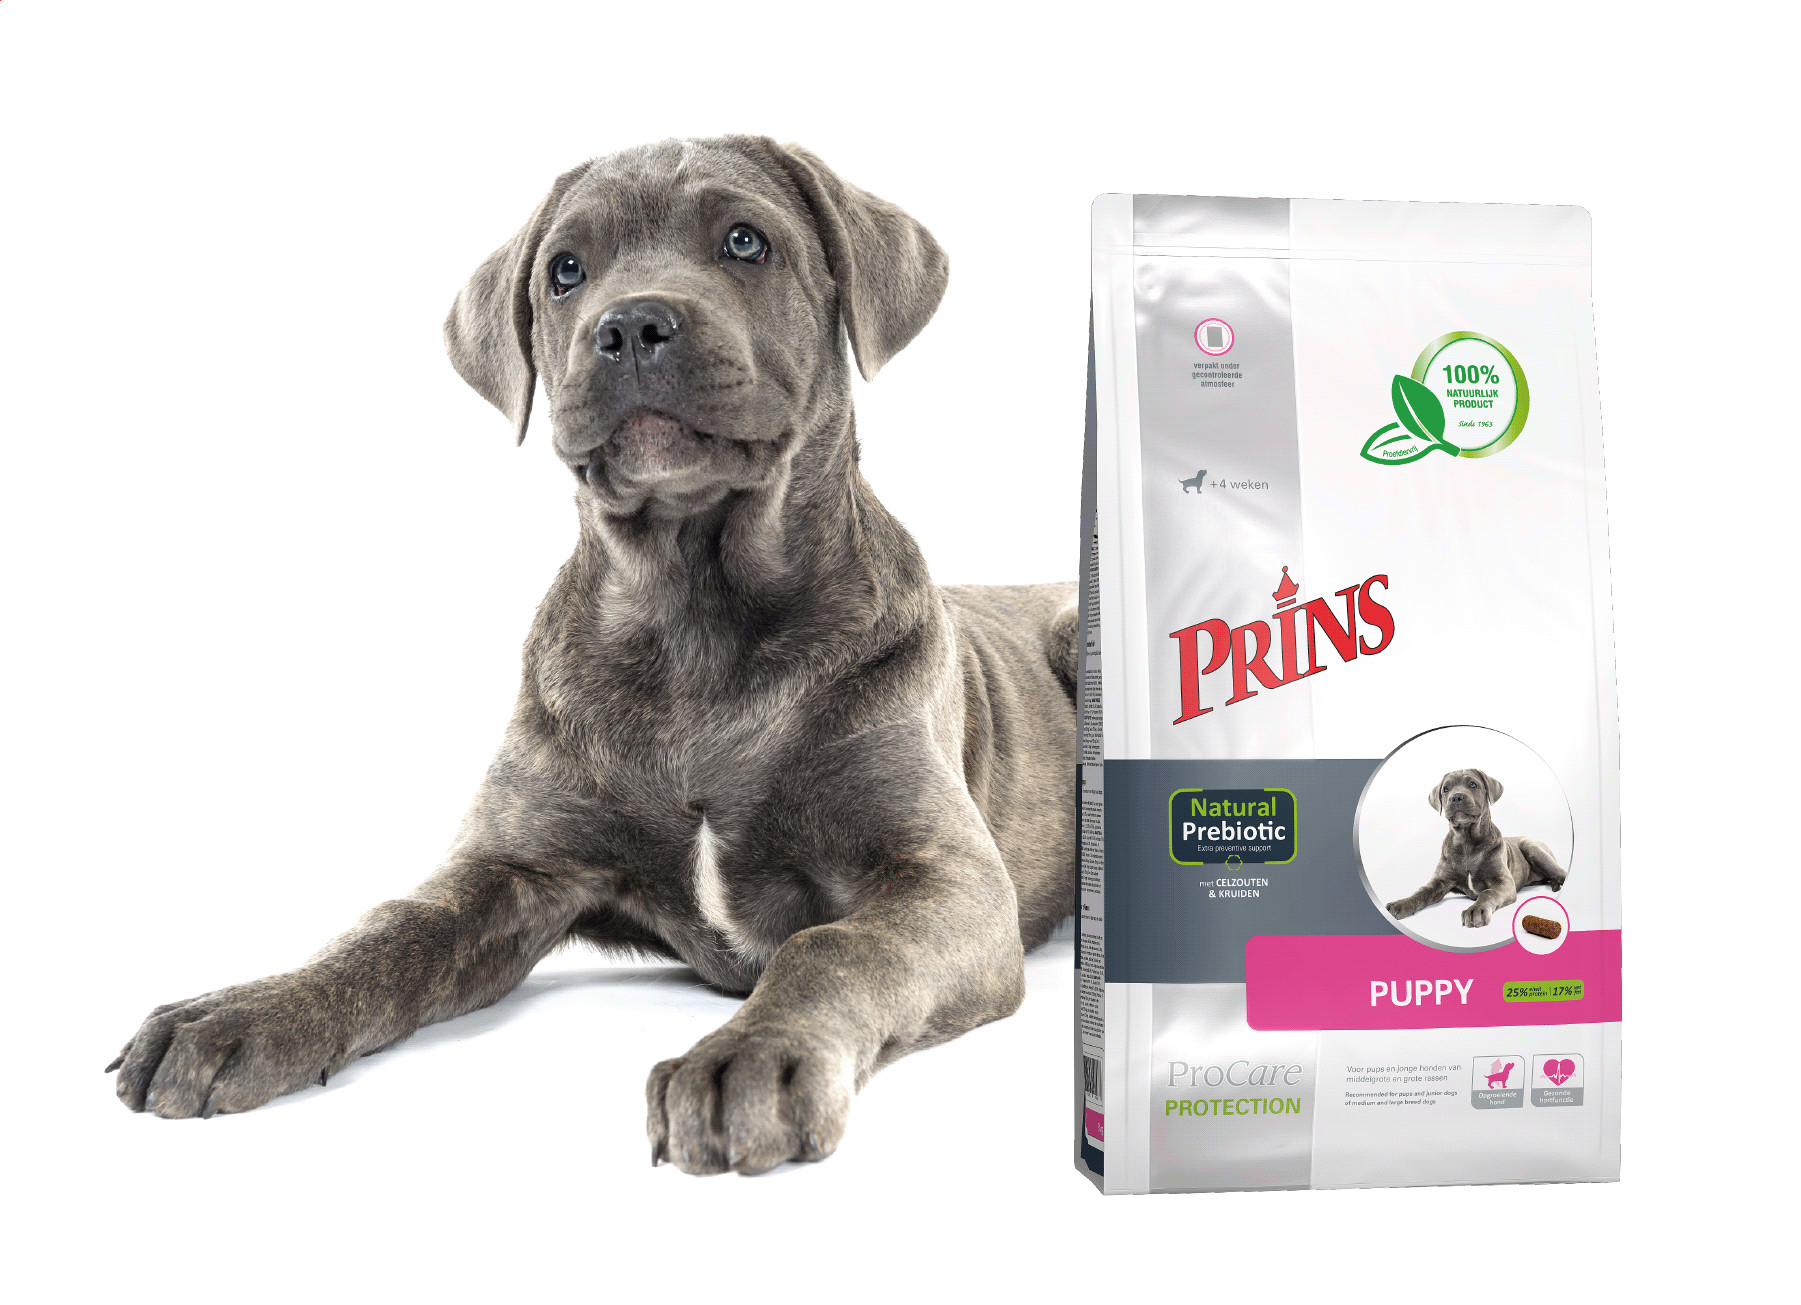 Prins ProCare Protection Puppy per cane